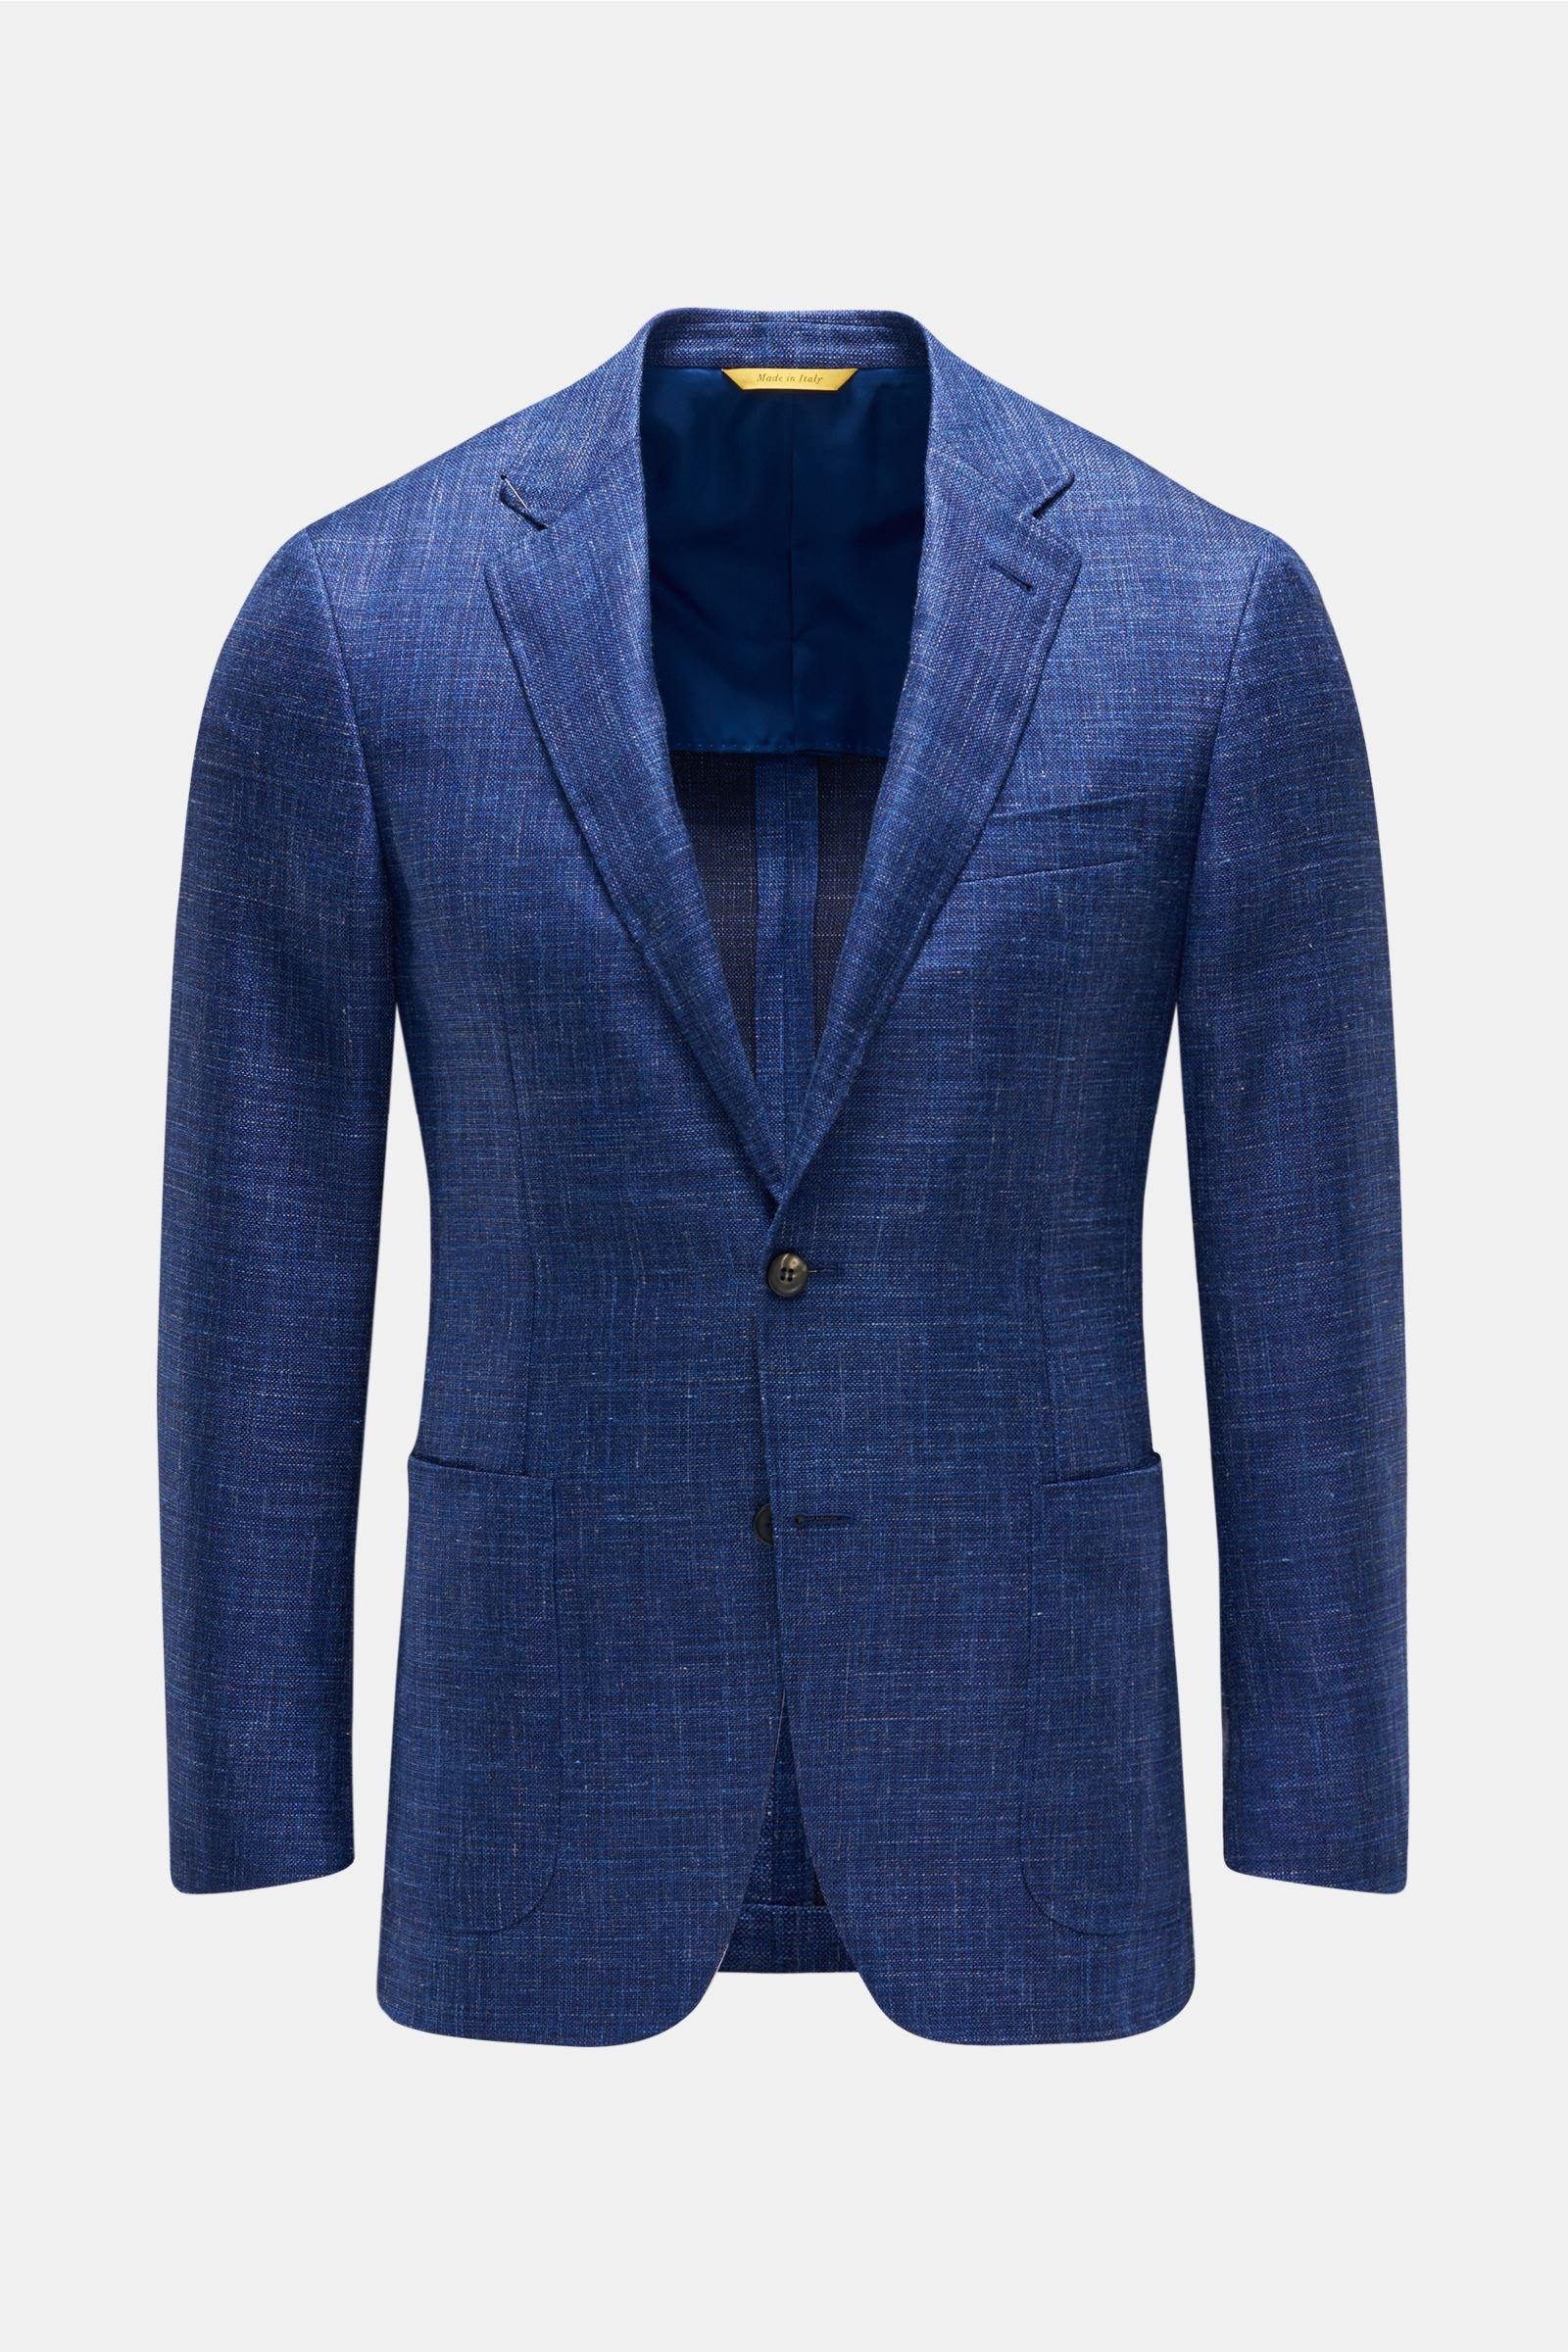 Smart-casual jacket 'Kei' dark blue